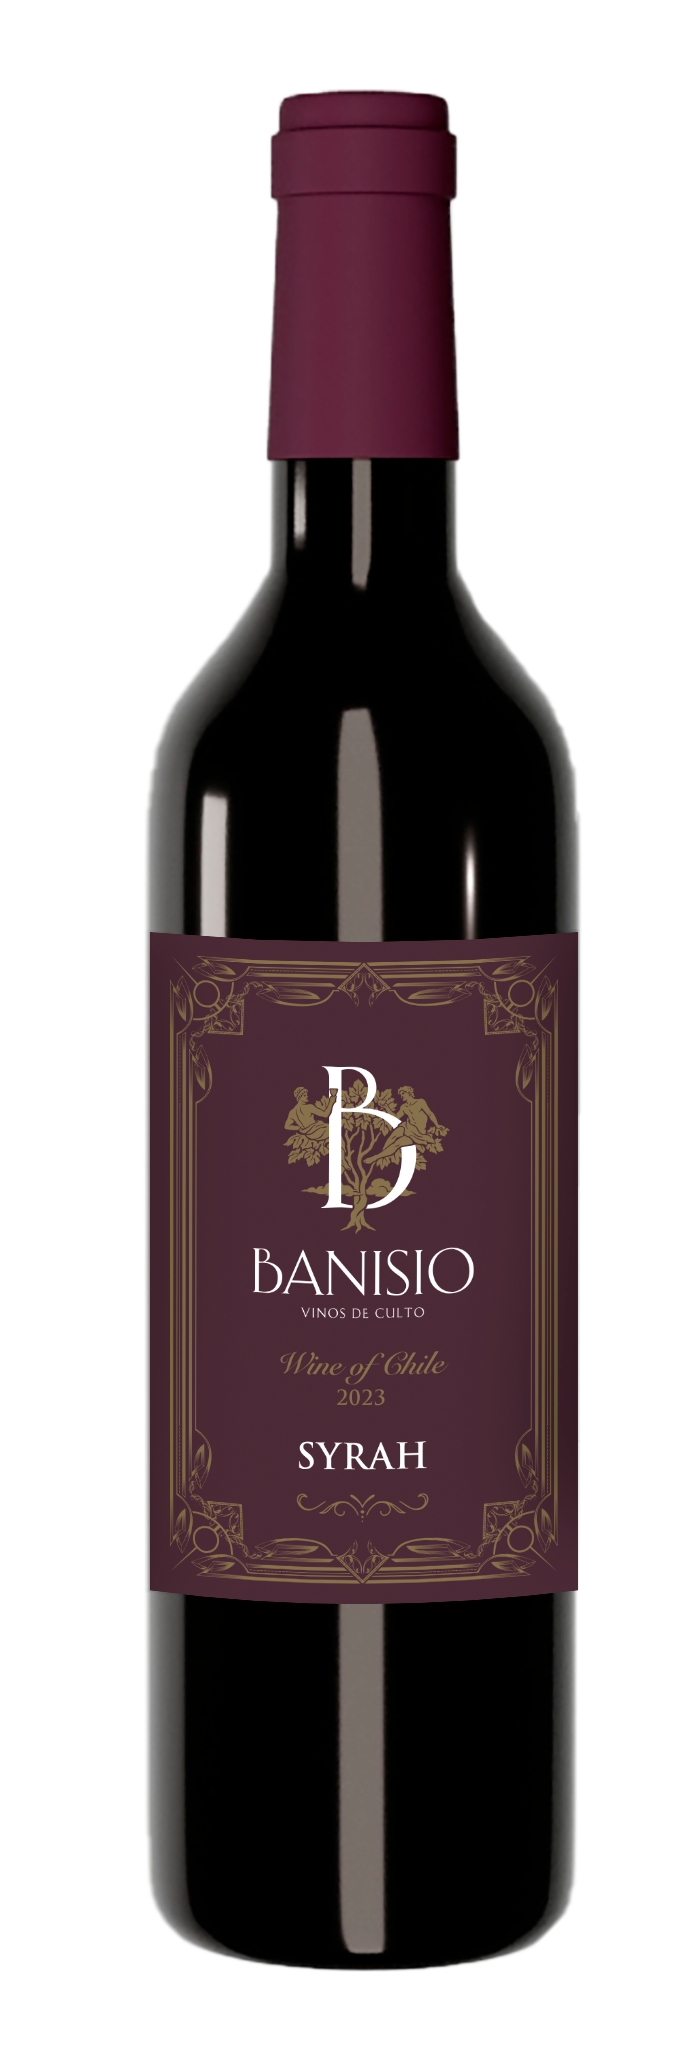 Wine from Chile, Syrah - Banisio